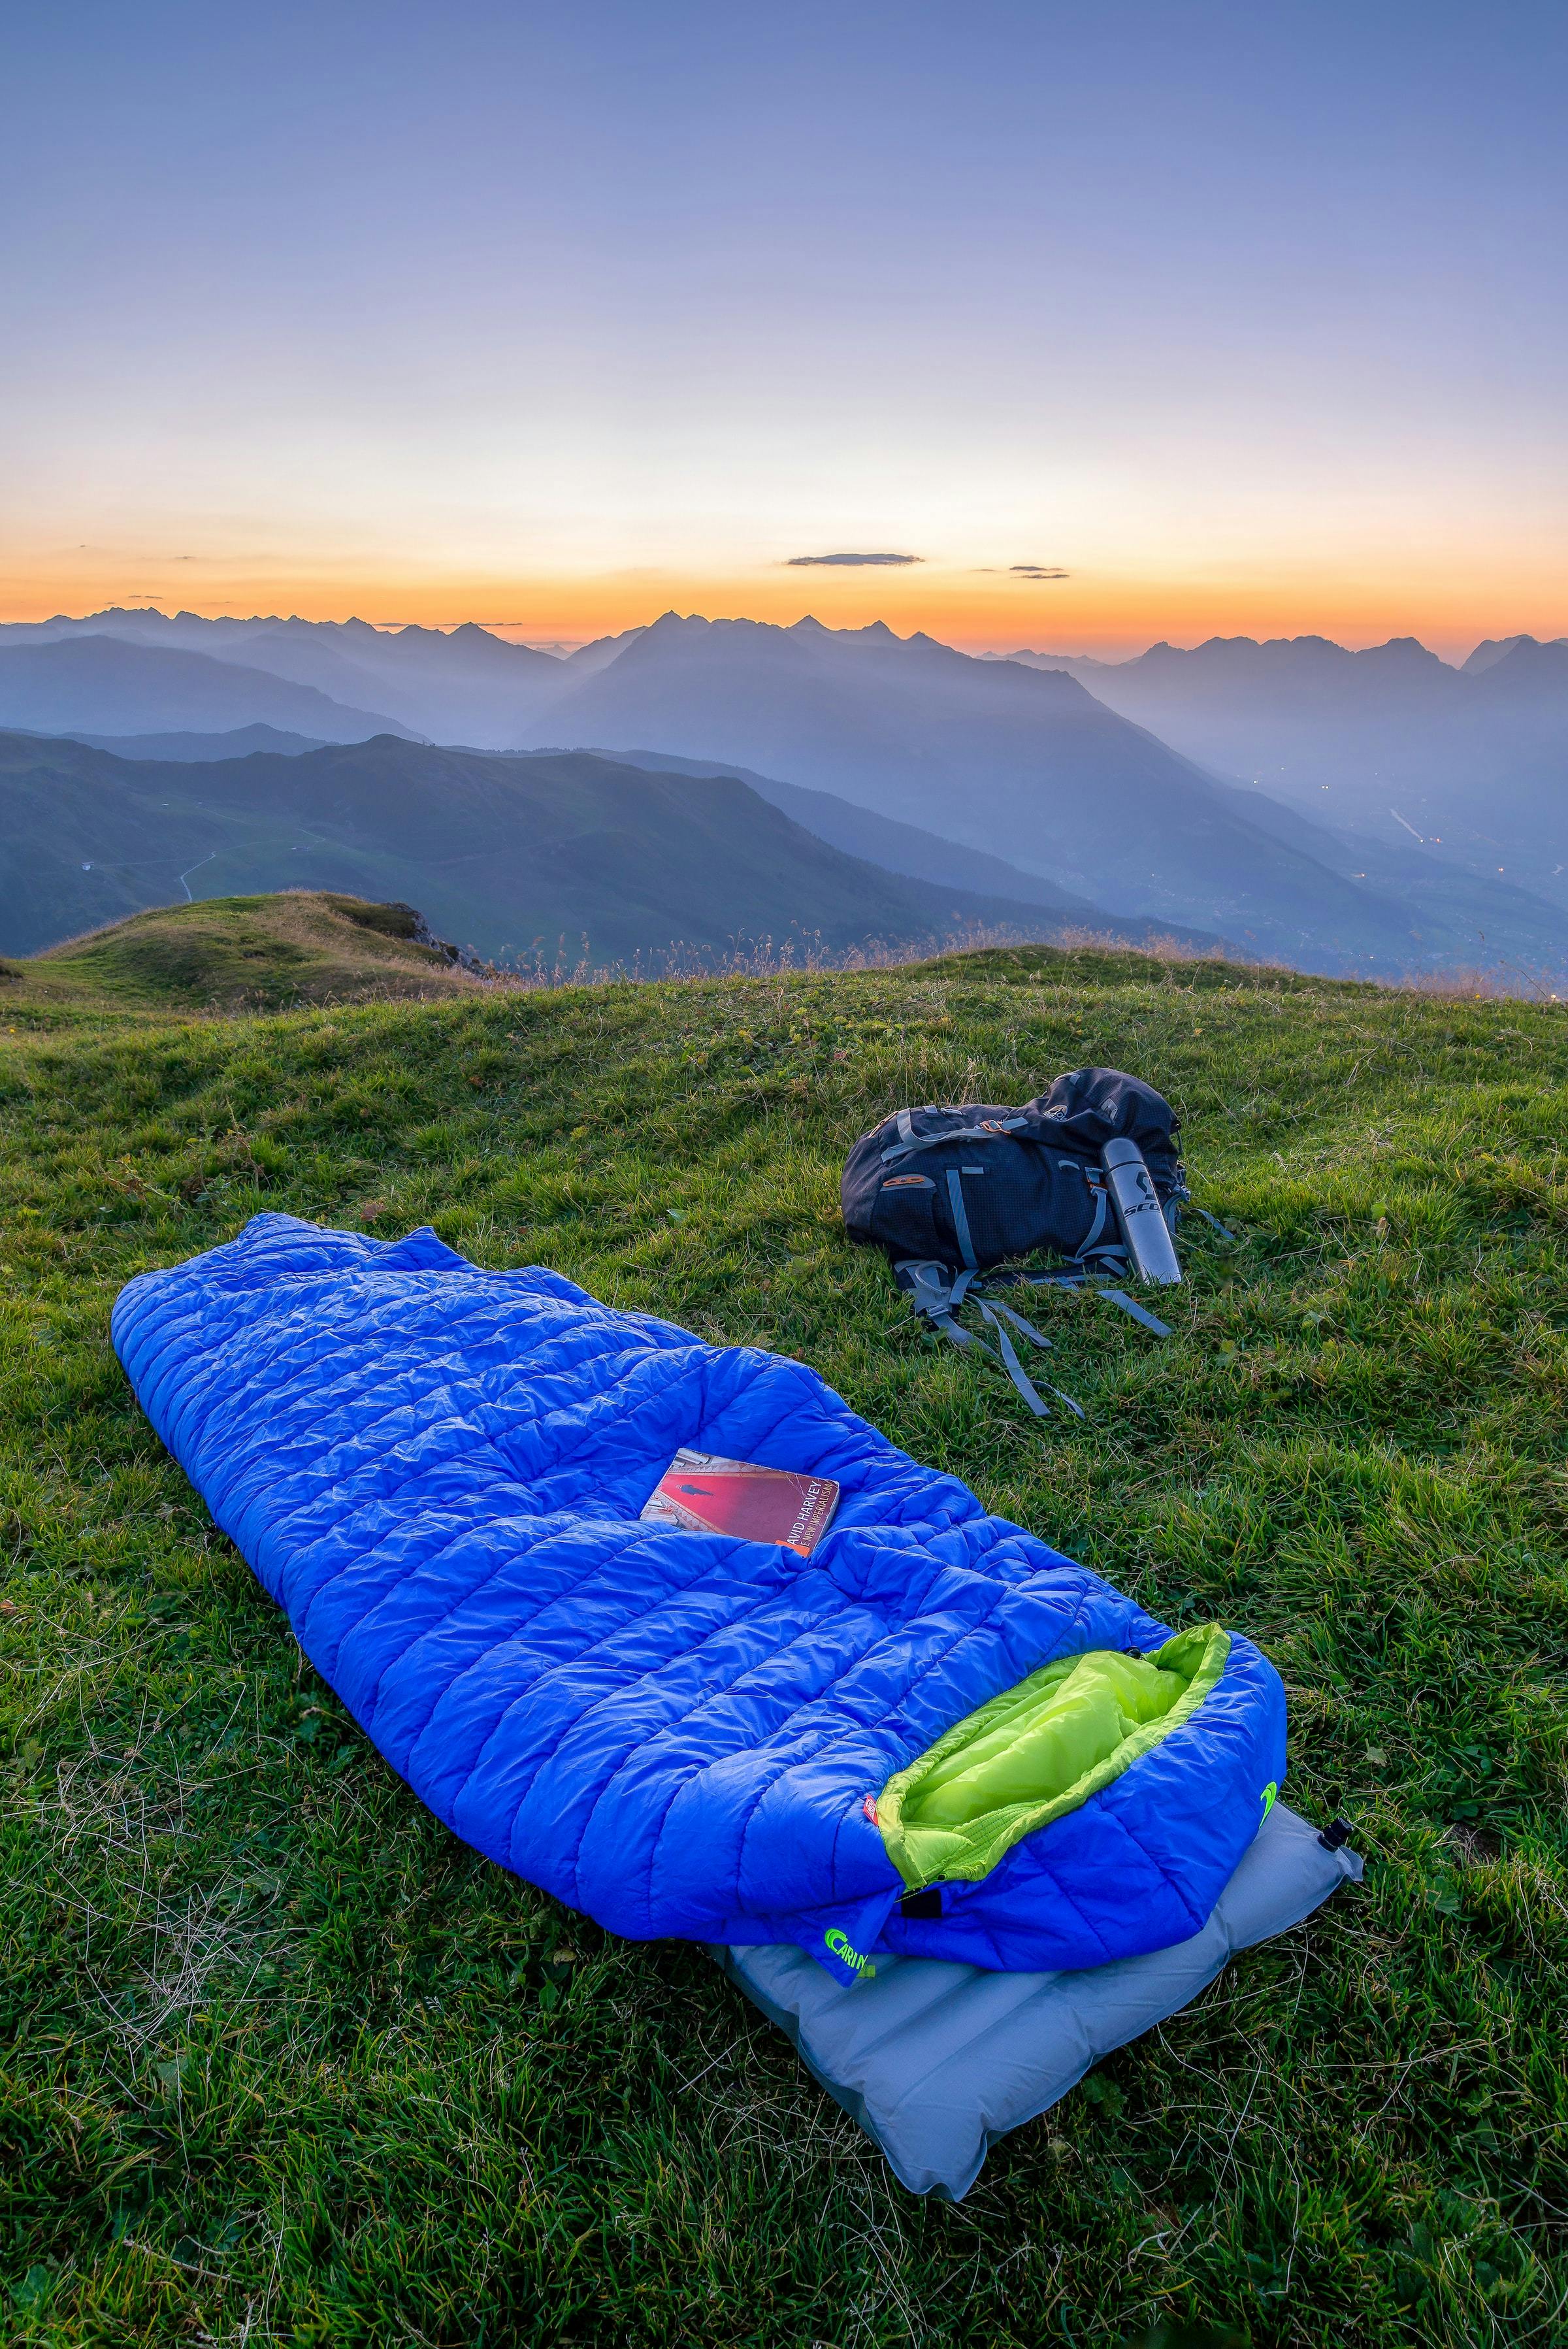 A semi-rectangular sleeping bag lying in some grass.